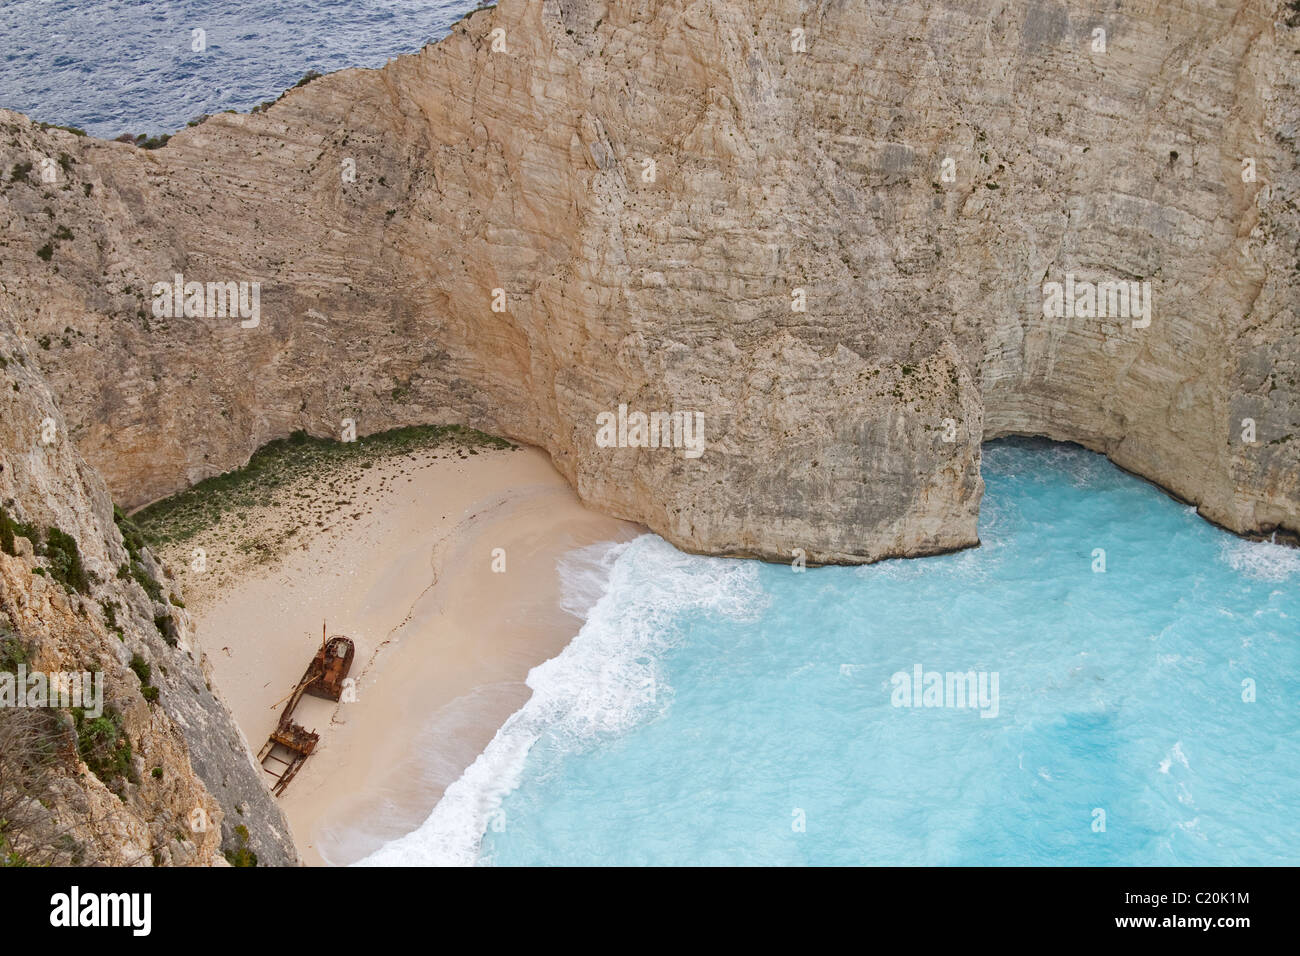 The famous secluded beach 'Shipwreck' of Zakynthos (Zante) island in Ionian Sea, Greece Stock Photo